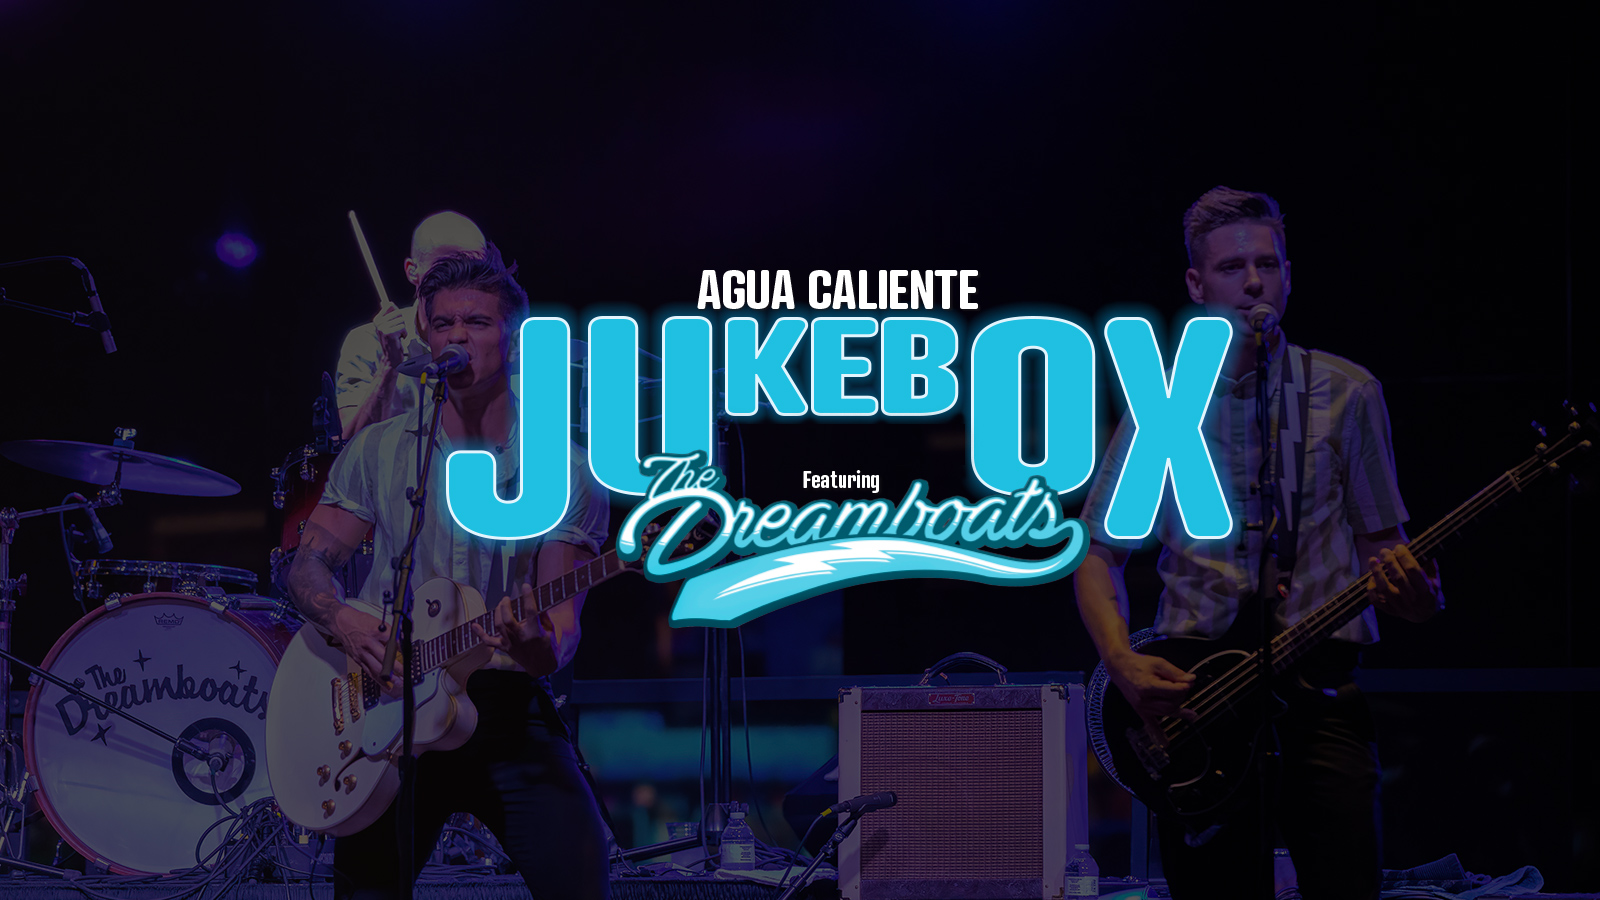 Agua Caliente Jukebox featuring The Dreamboats Agua Caliente Casinos